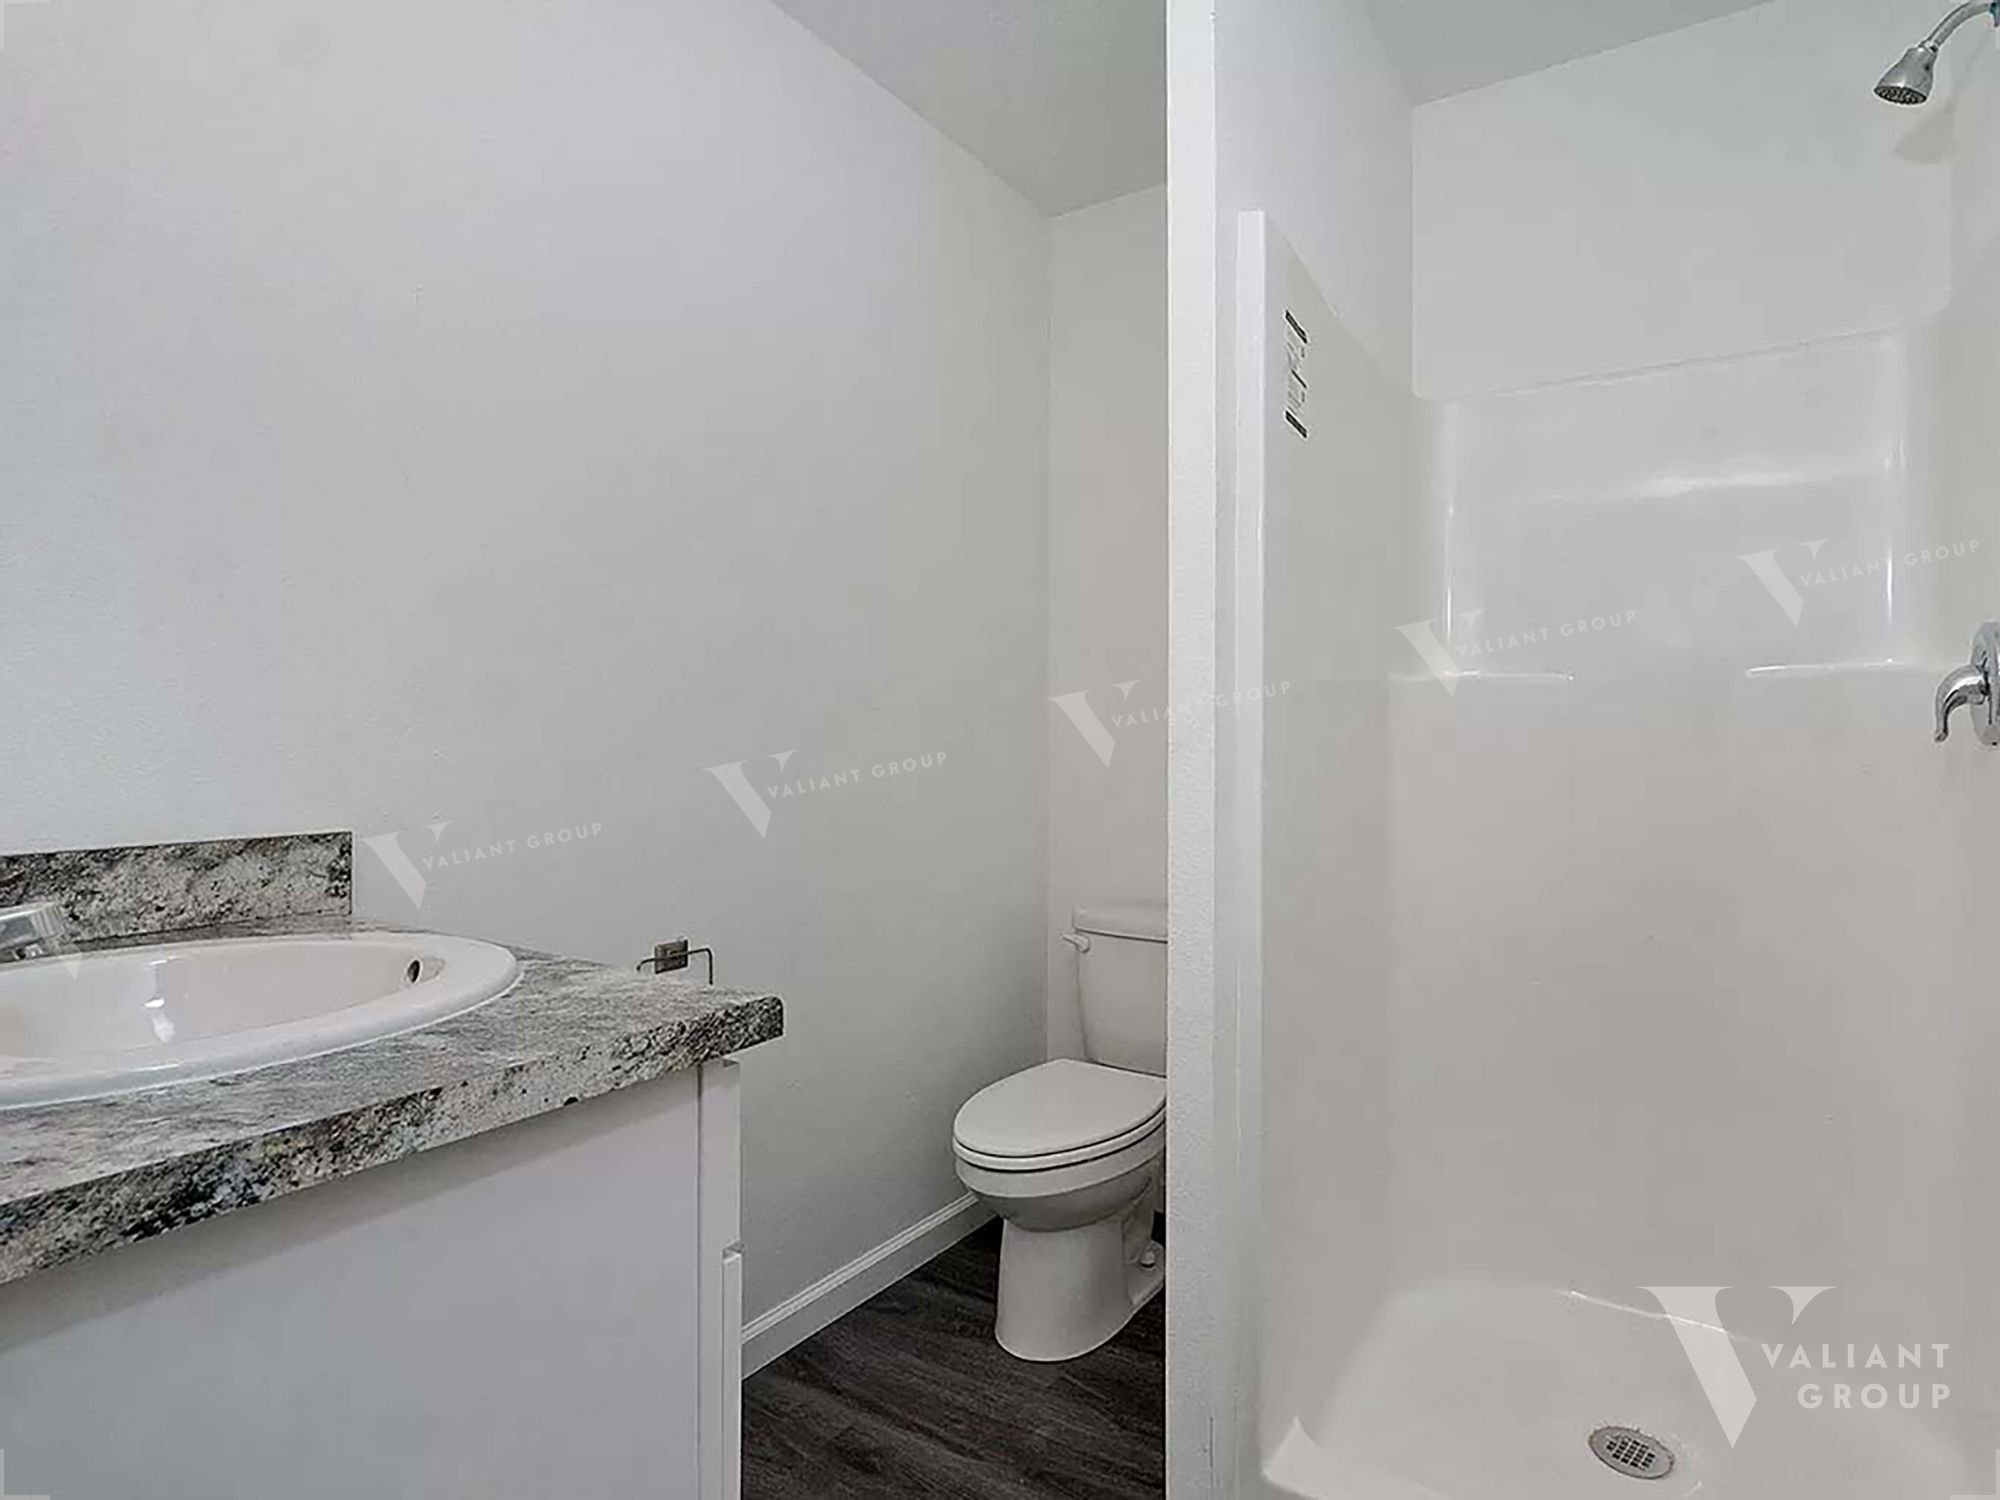 Rental Duplex Springfield MO 1610 W Scott Unit B - bathroom 02.jpg